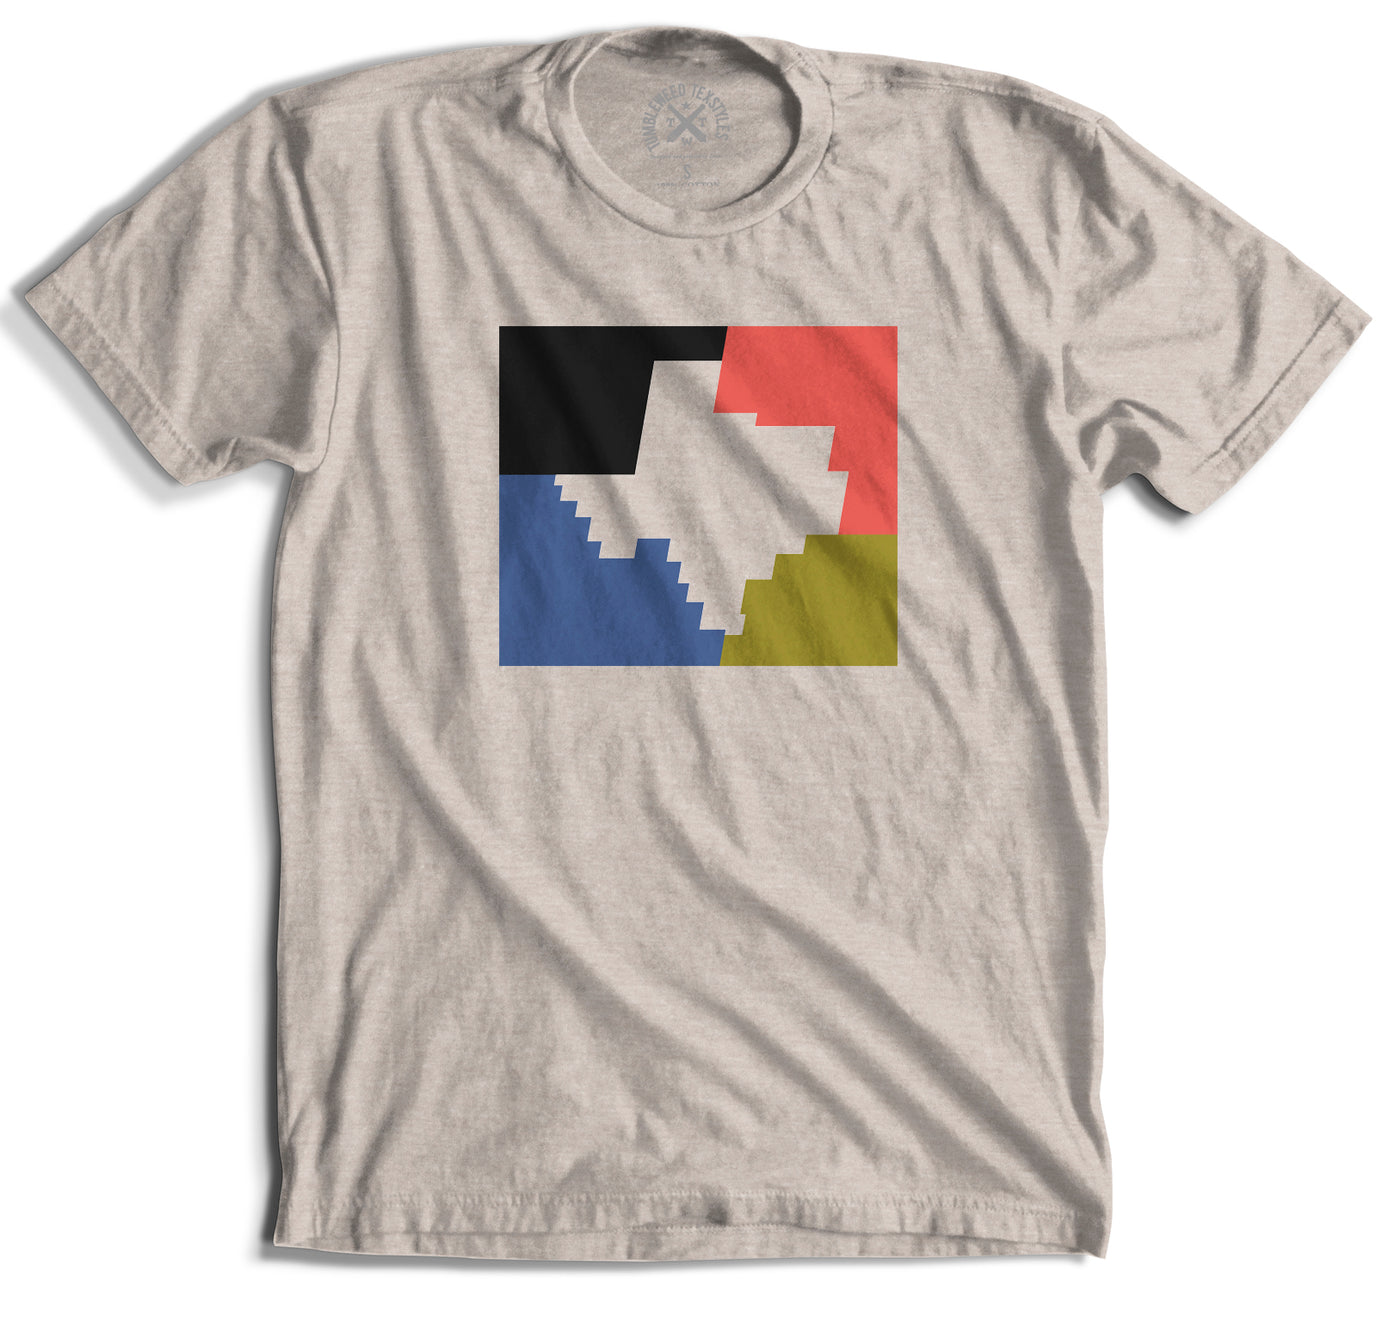 Texas T-Shirts, Hats and Gear - Hand-drawn Texas designs